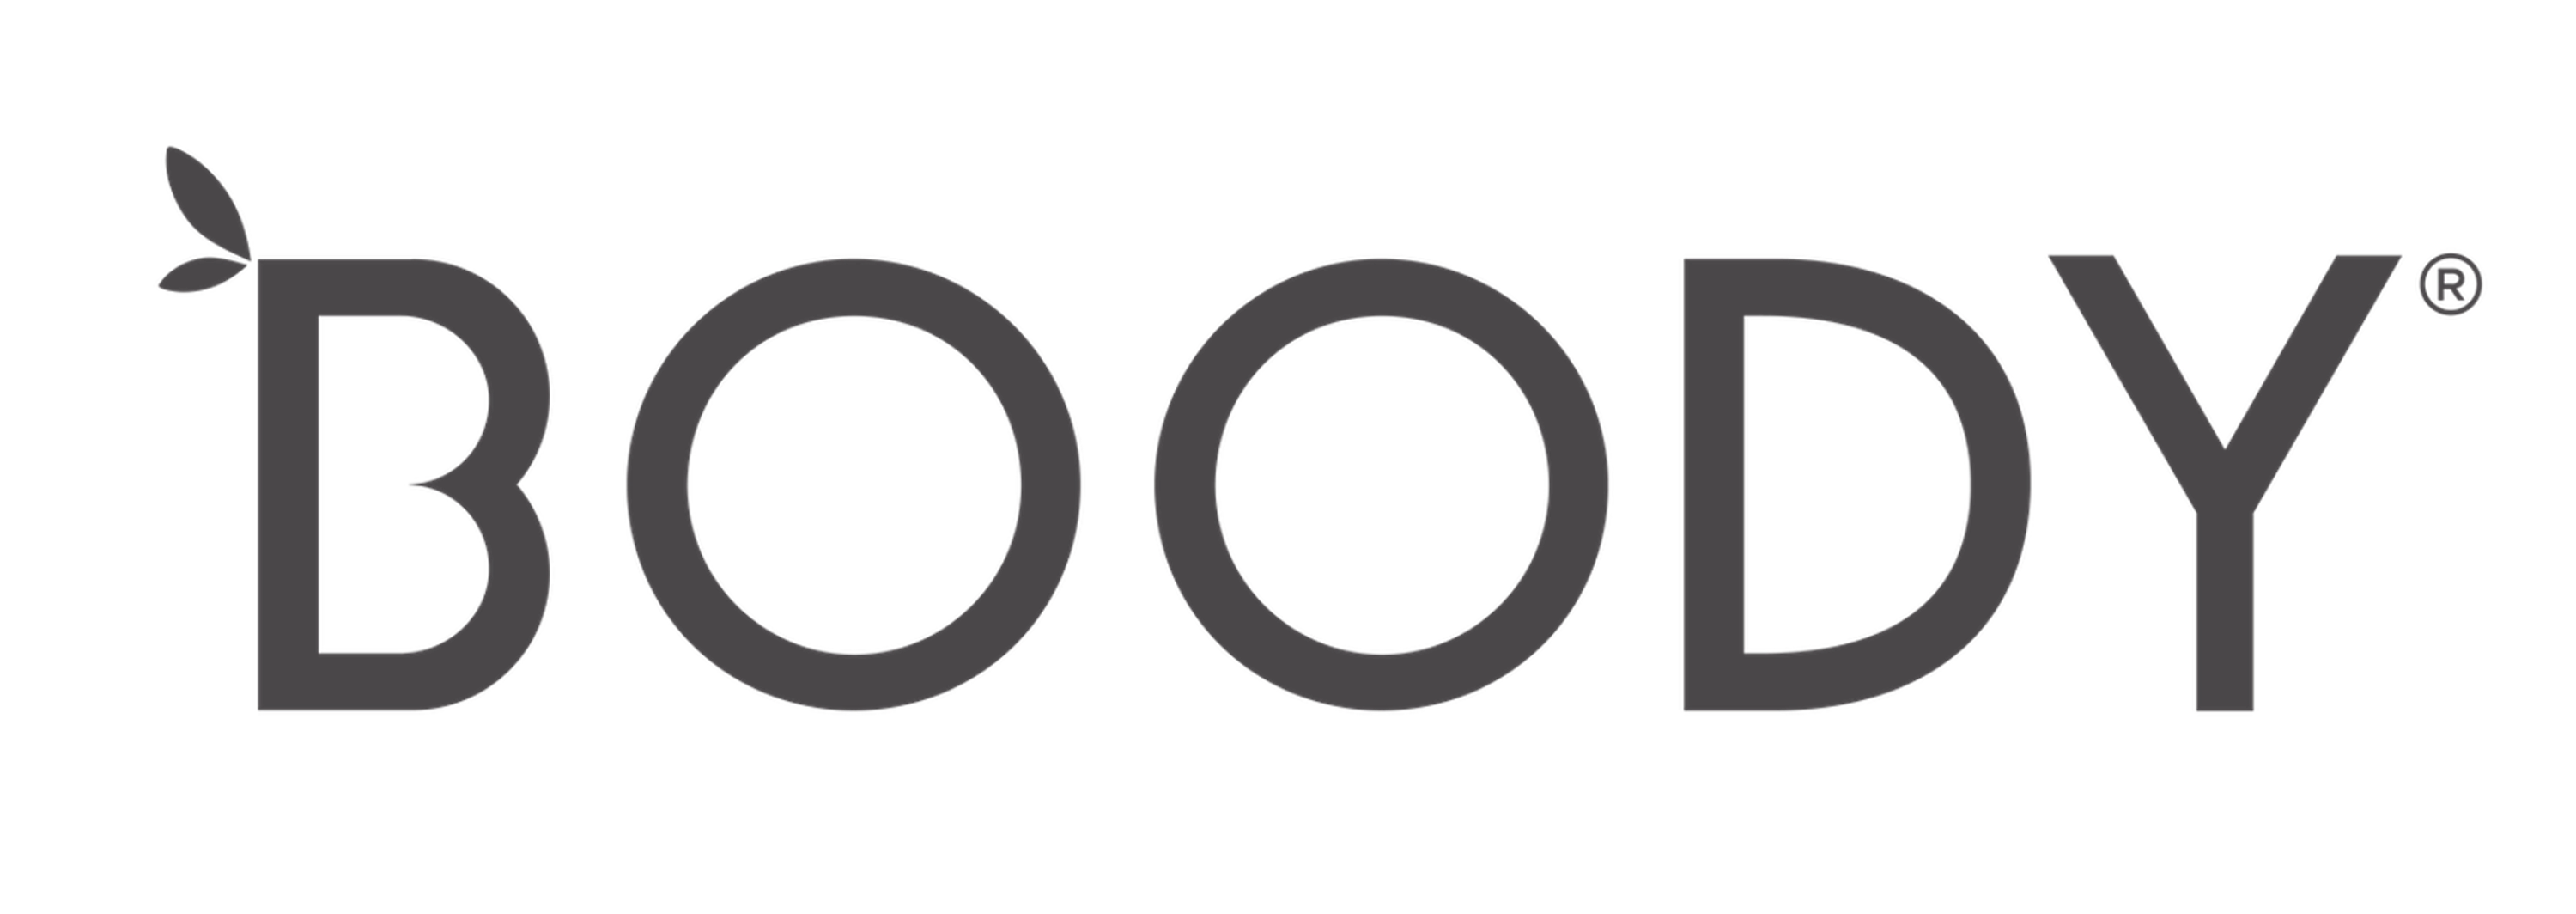 Boody US logo